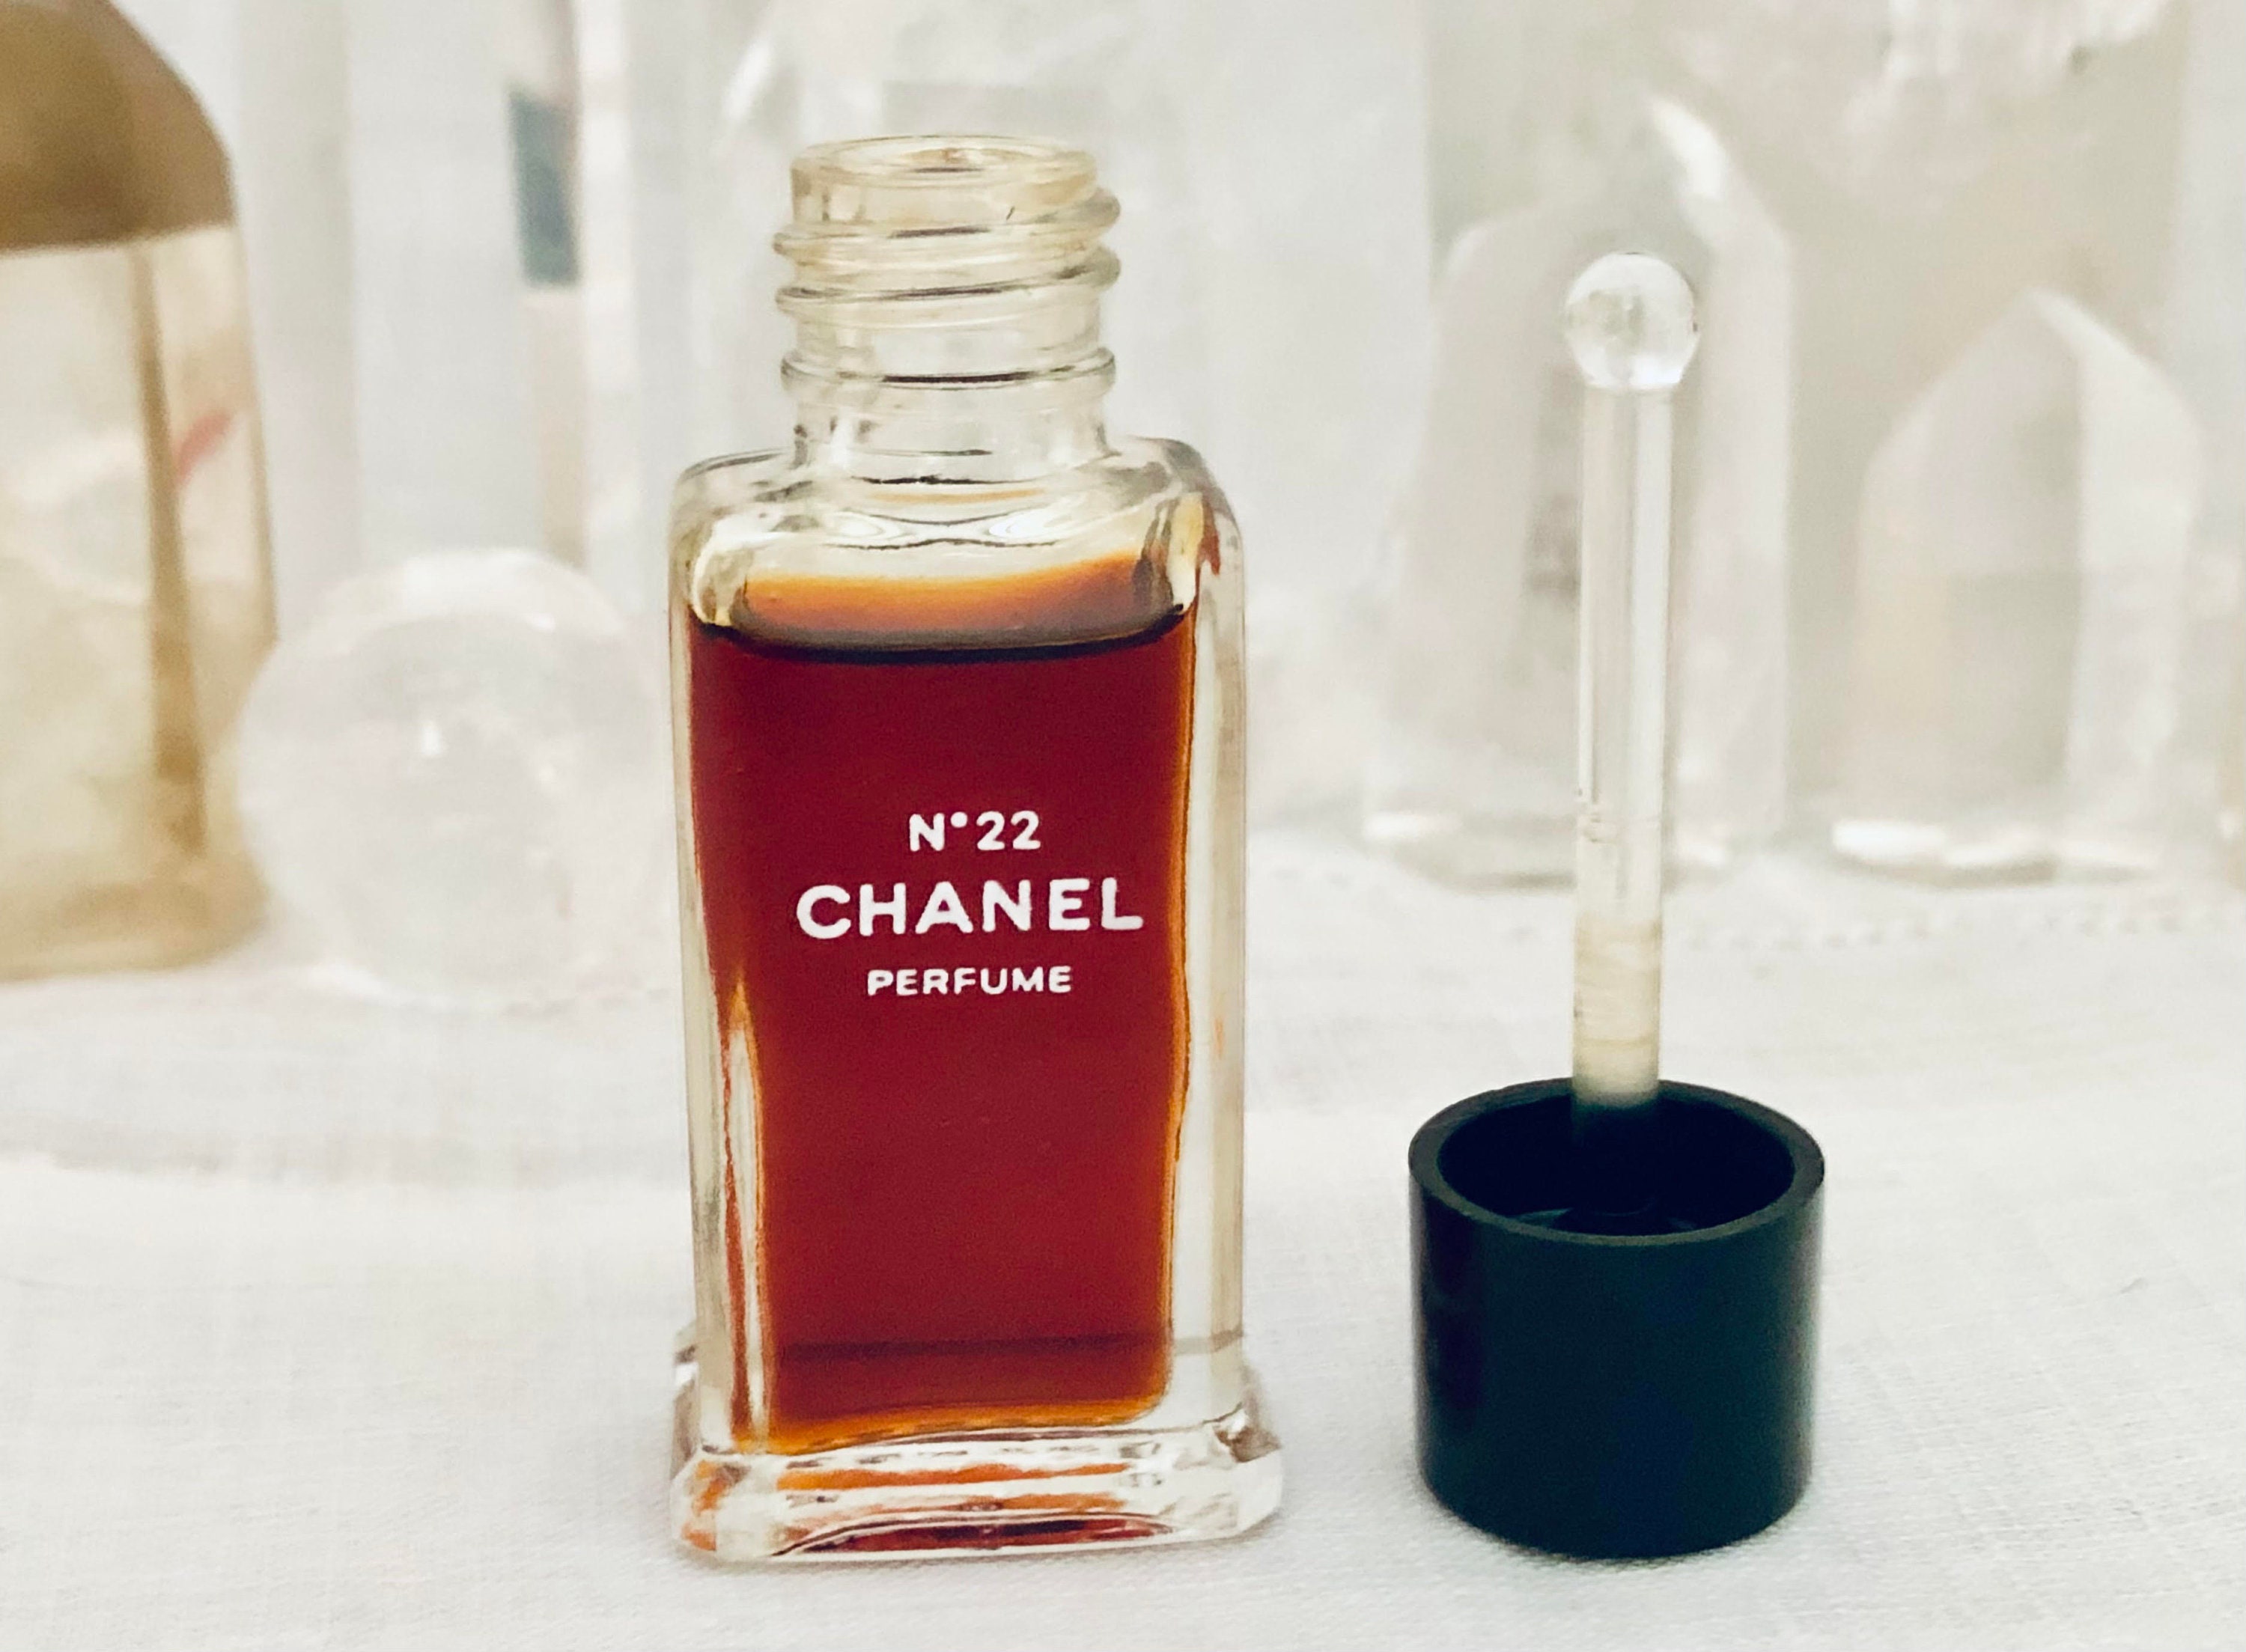 Chanel No. 22 7.5 Ml. or 0.25 Oz Parfum Extrait 1921 